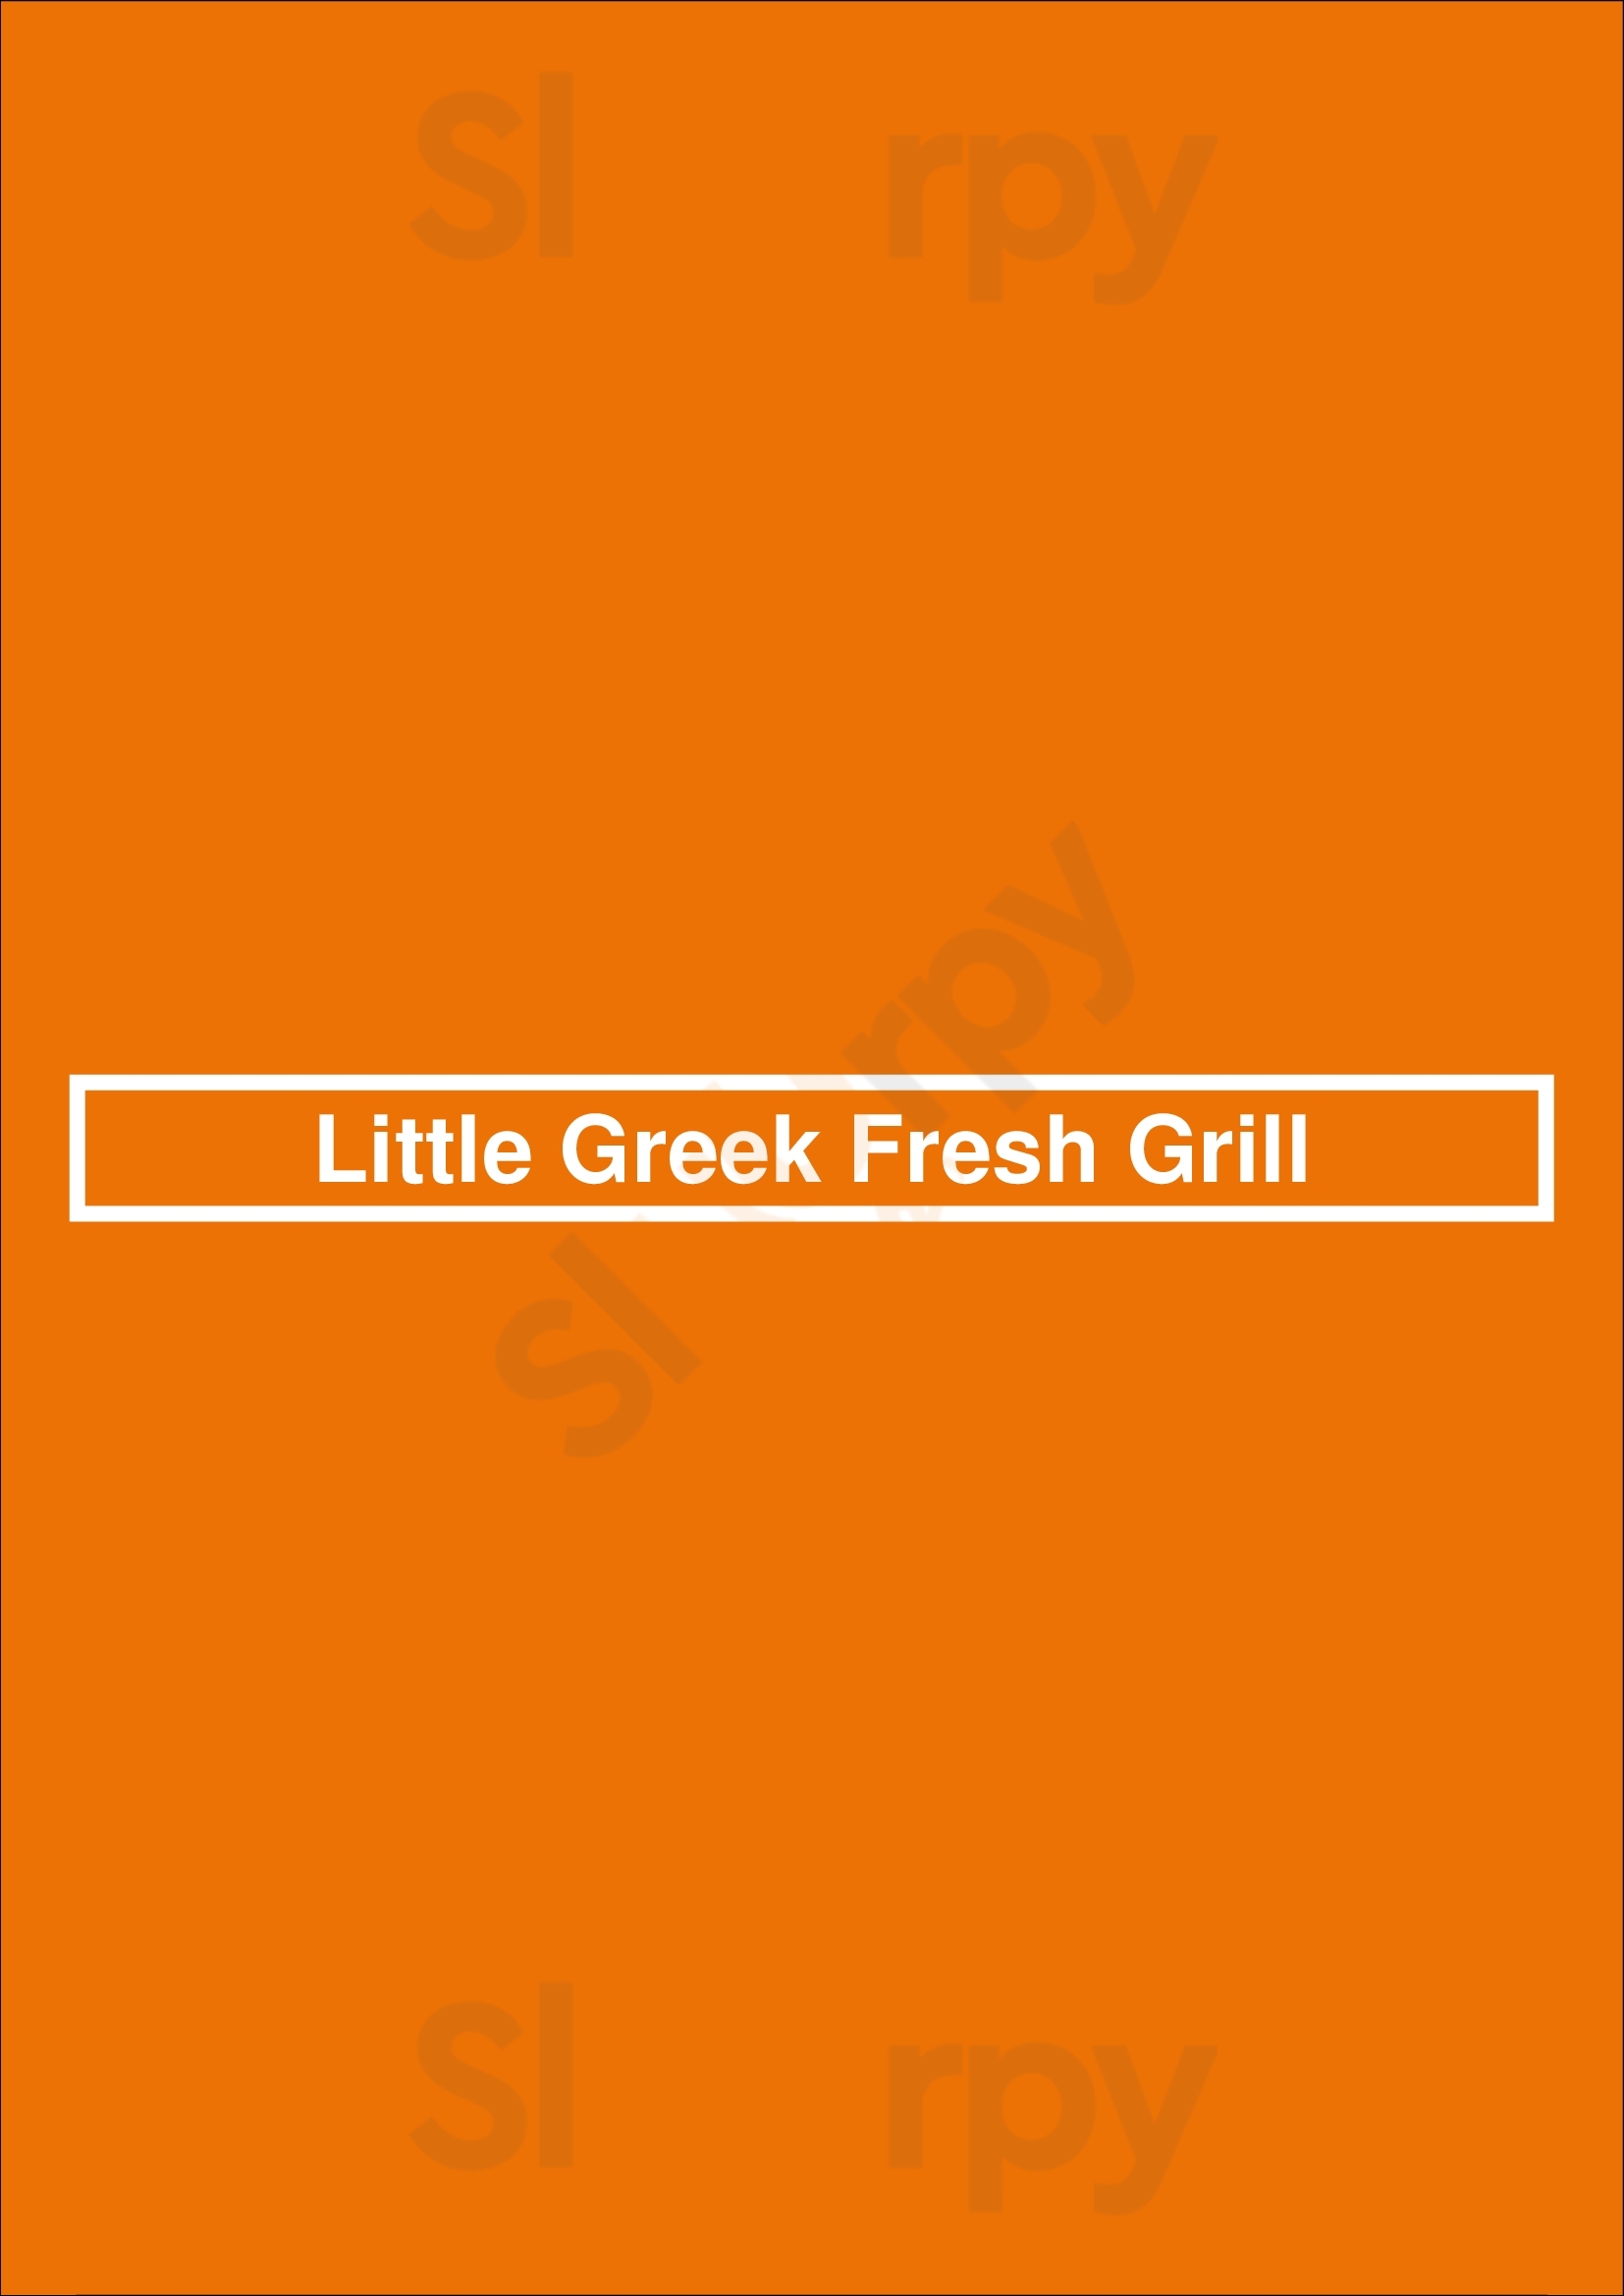 Little Greek Fresh Grill Coppell Menu - 1